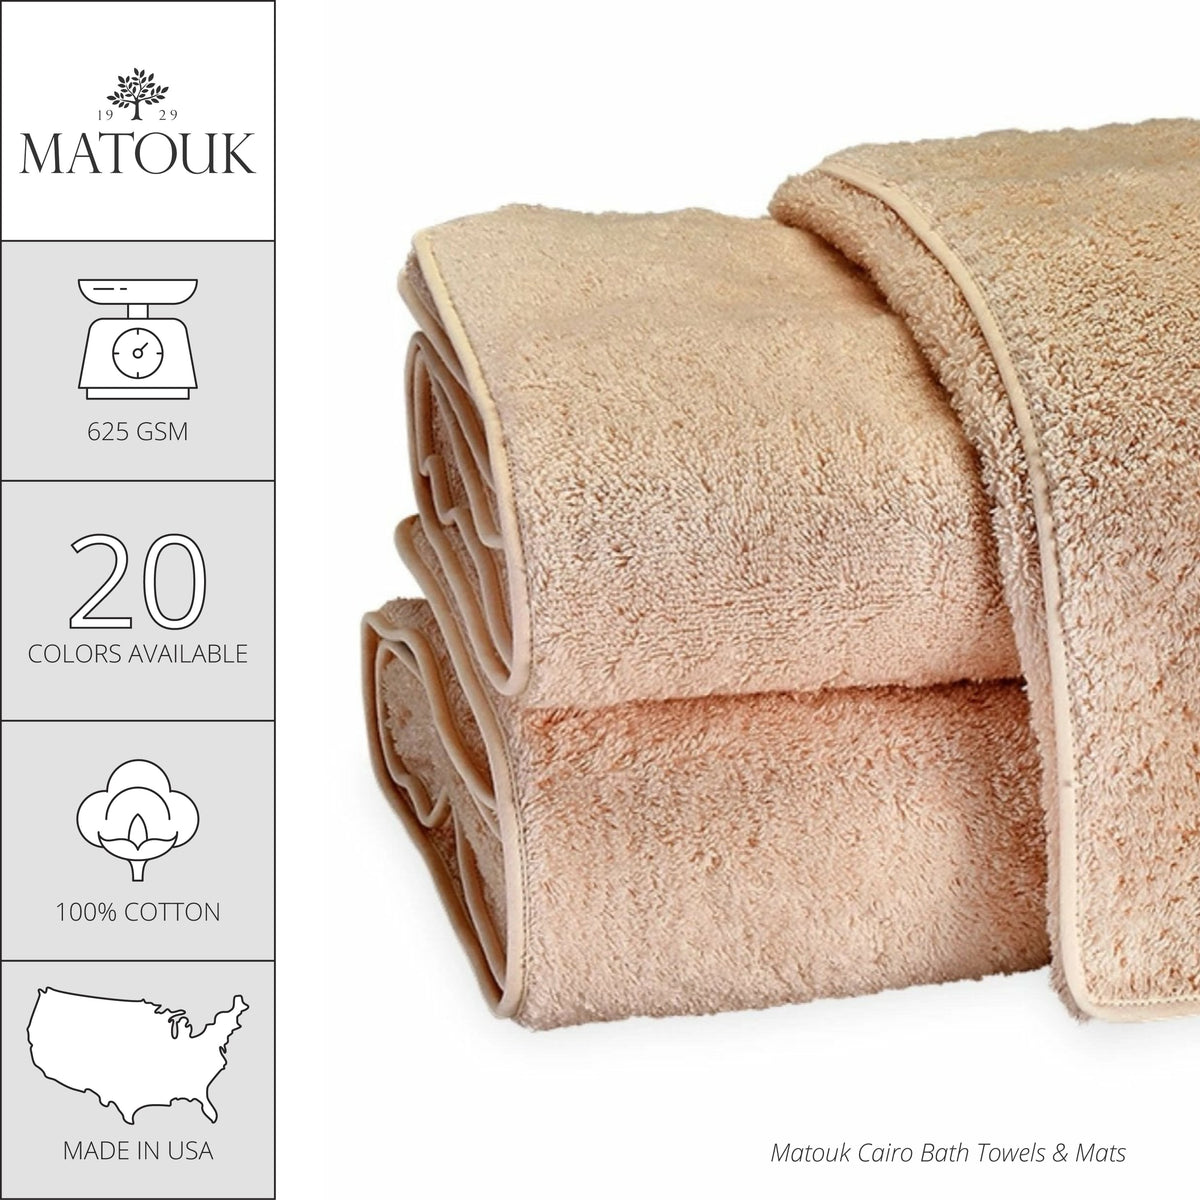 Matouk Cairo Bath Towels and Mats - White/White